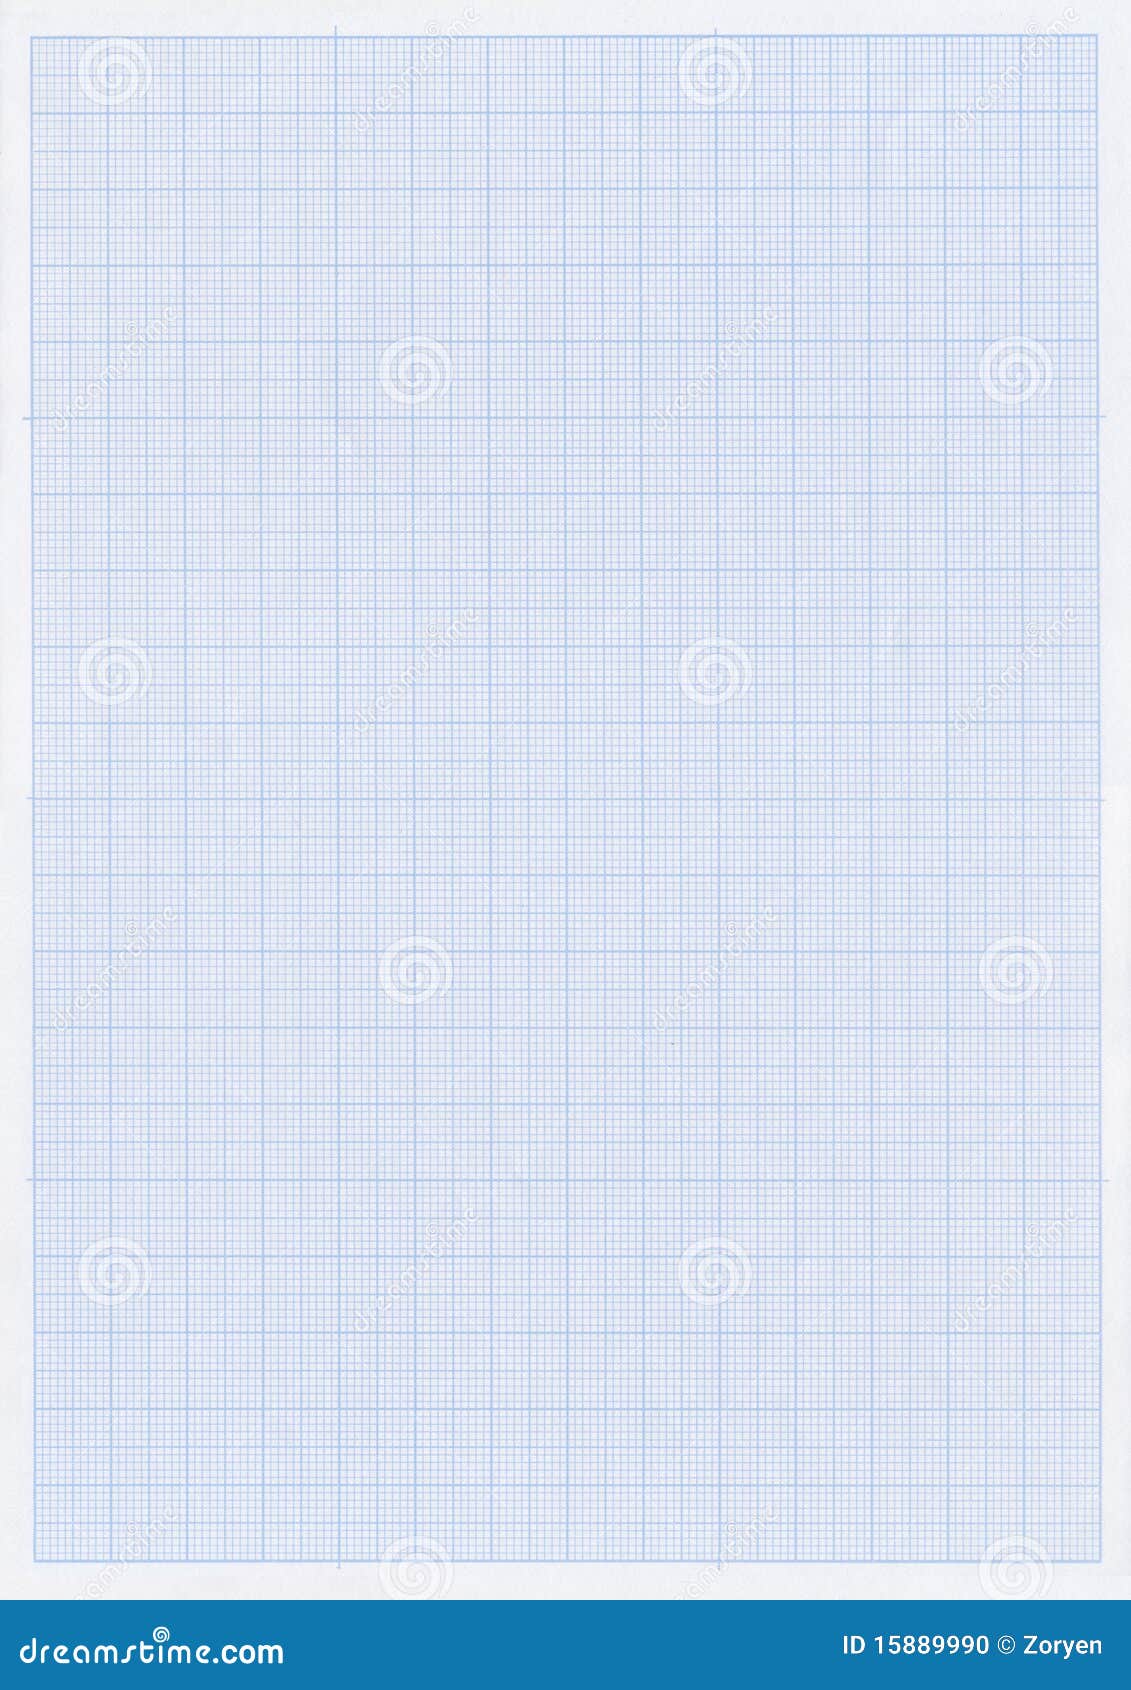 blue graph or grid paper